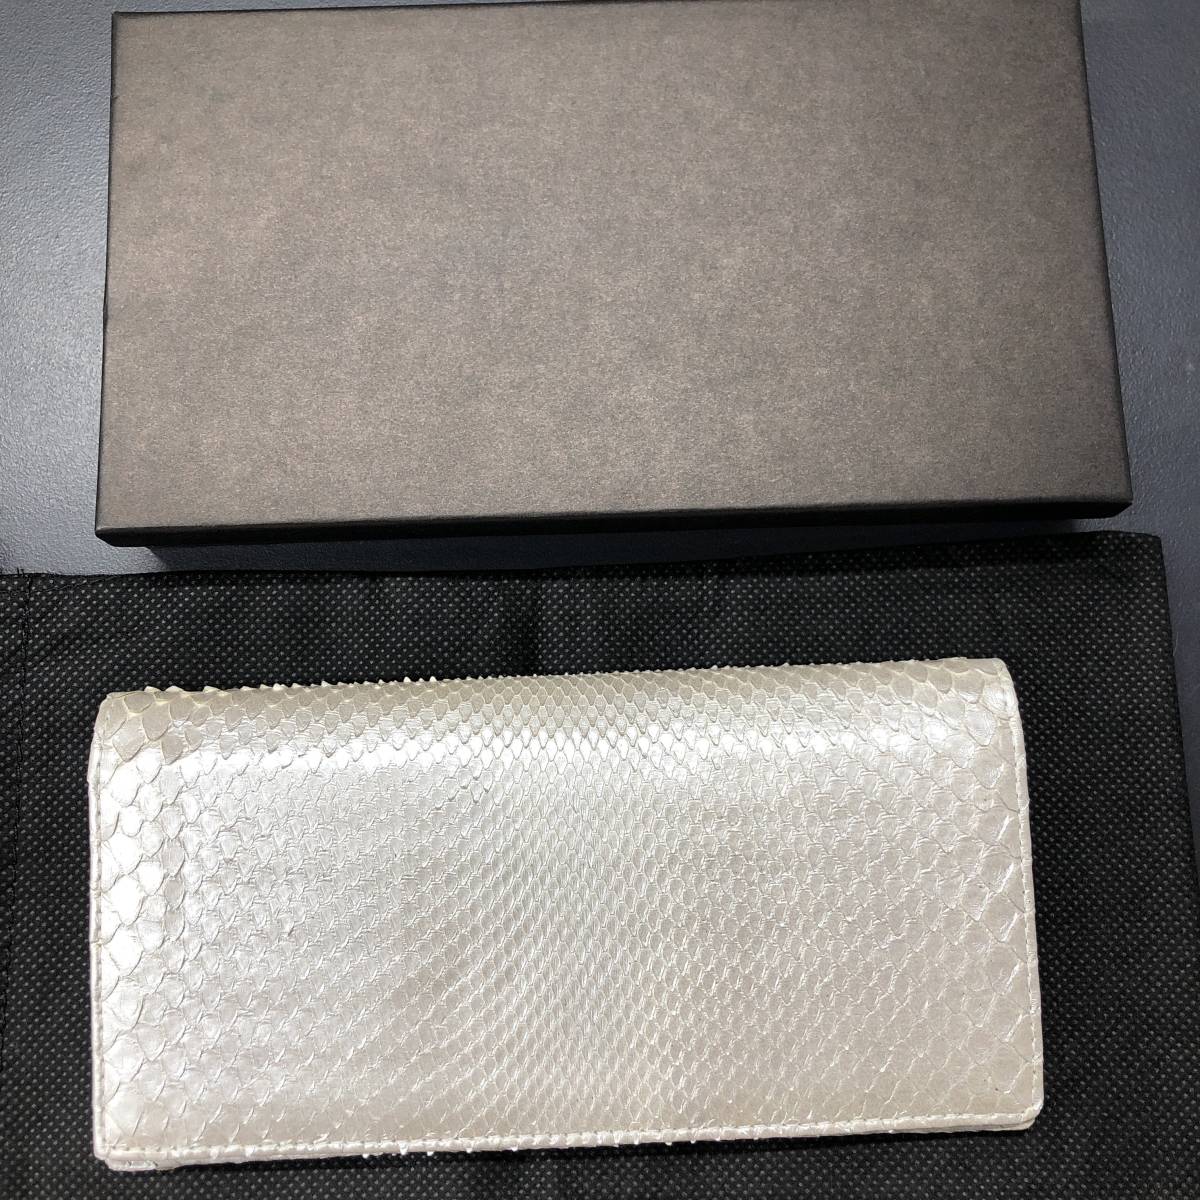 HB9381 長財布 かぶせ 財布 レザー パイソン シルバー ヘビ革 専用袋 箱付き 未使用品の画像1